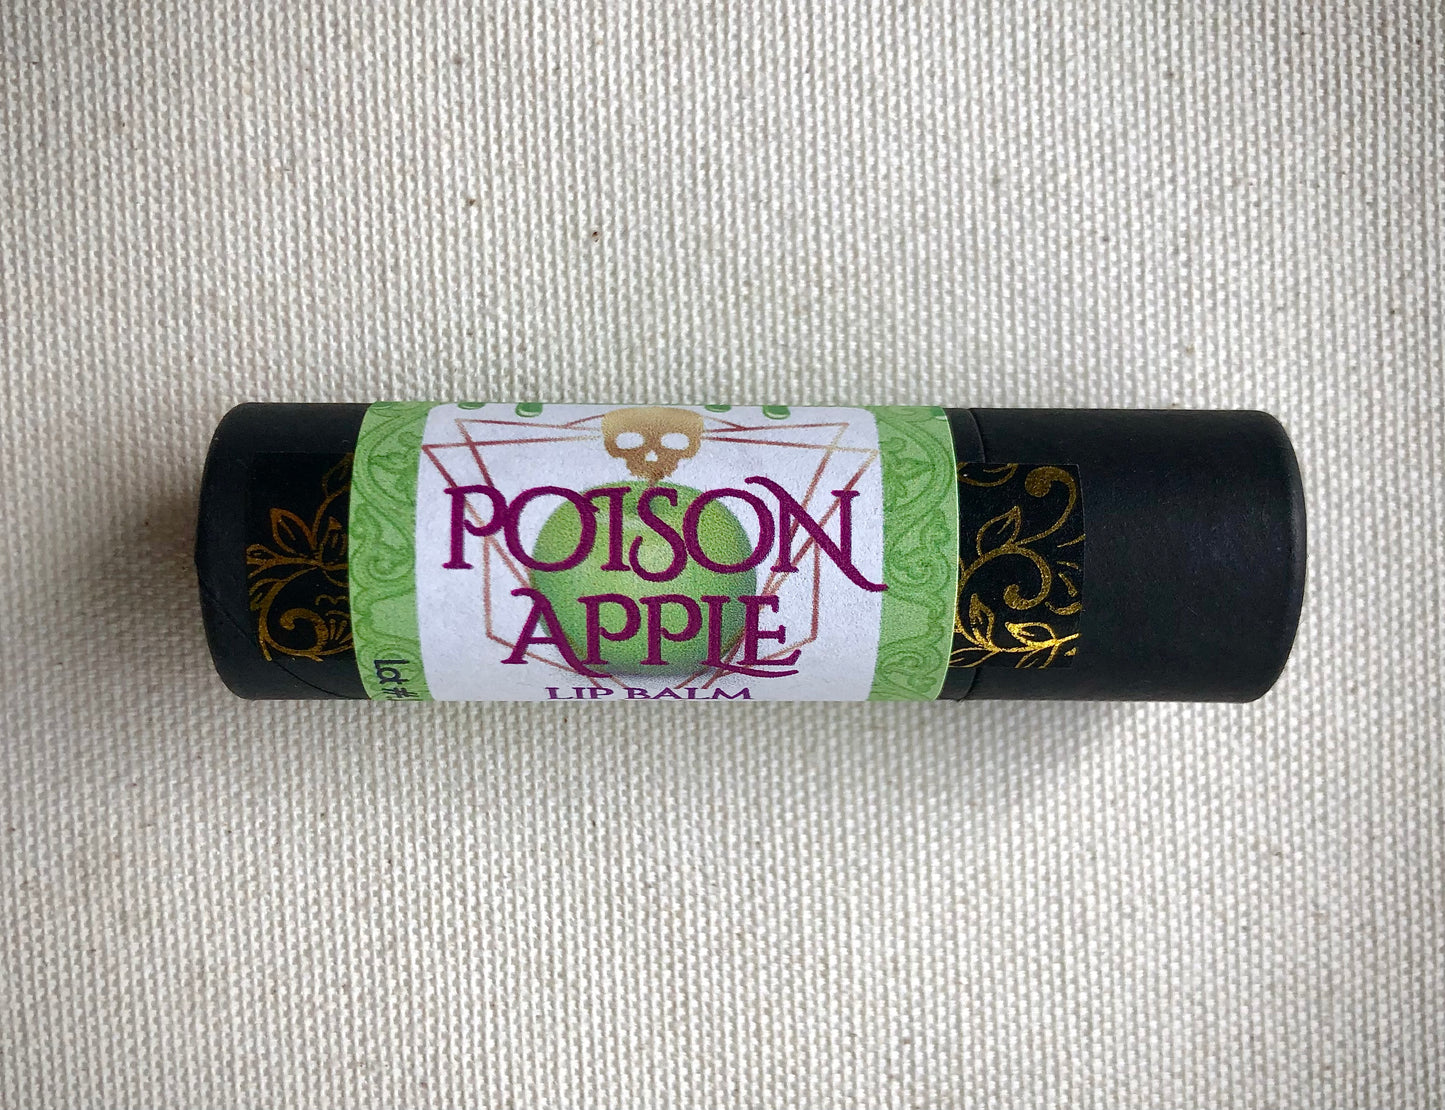 Poison Apple Lip Balm